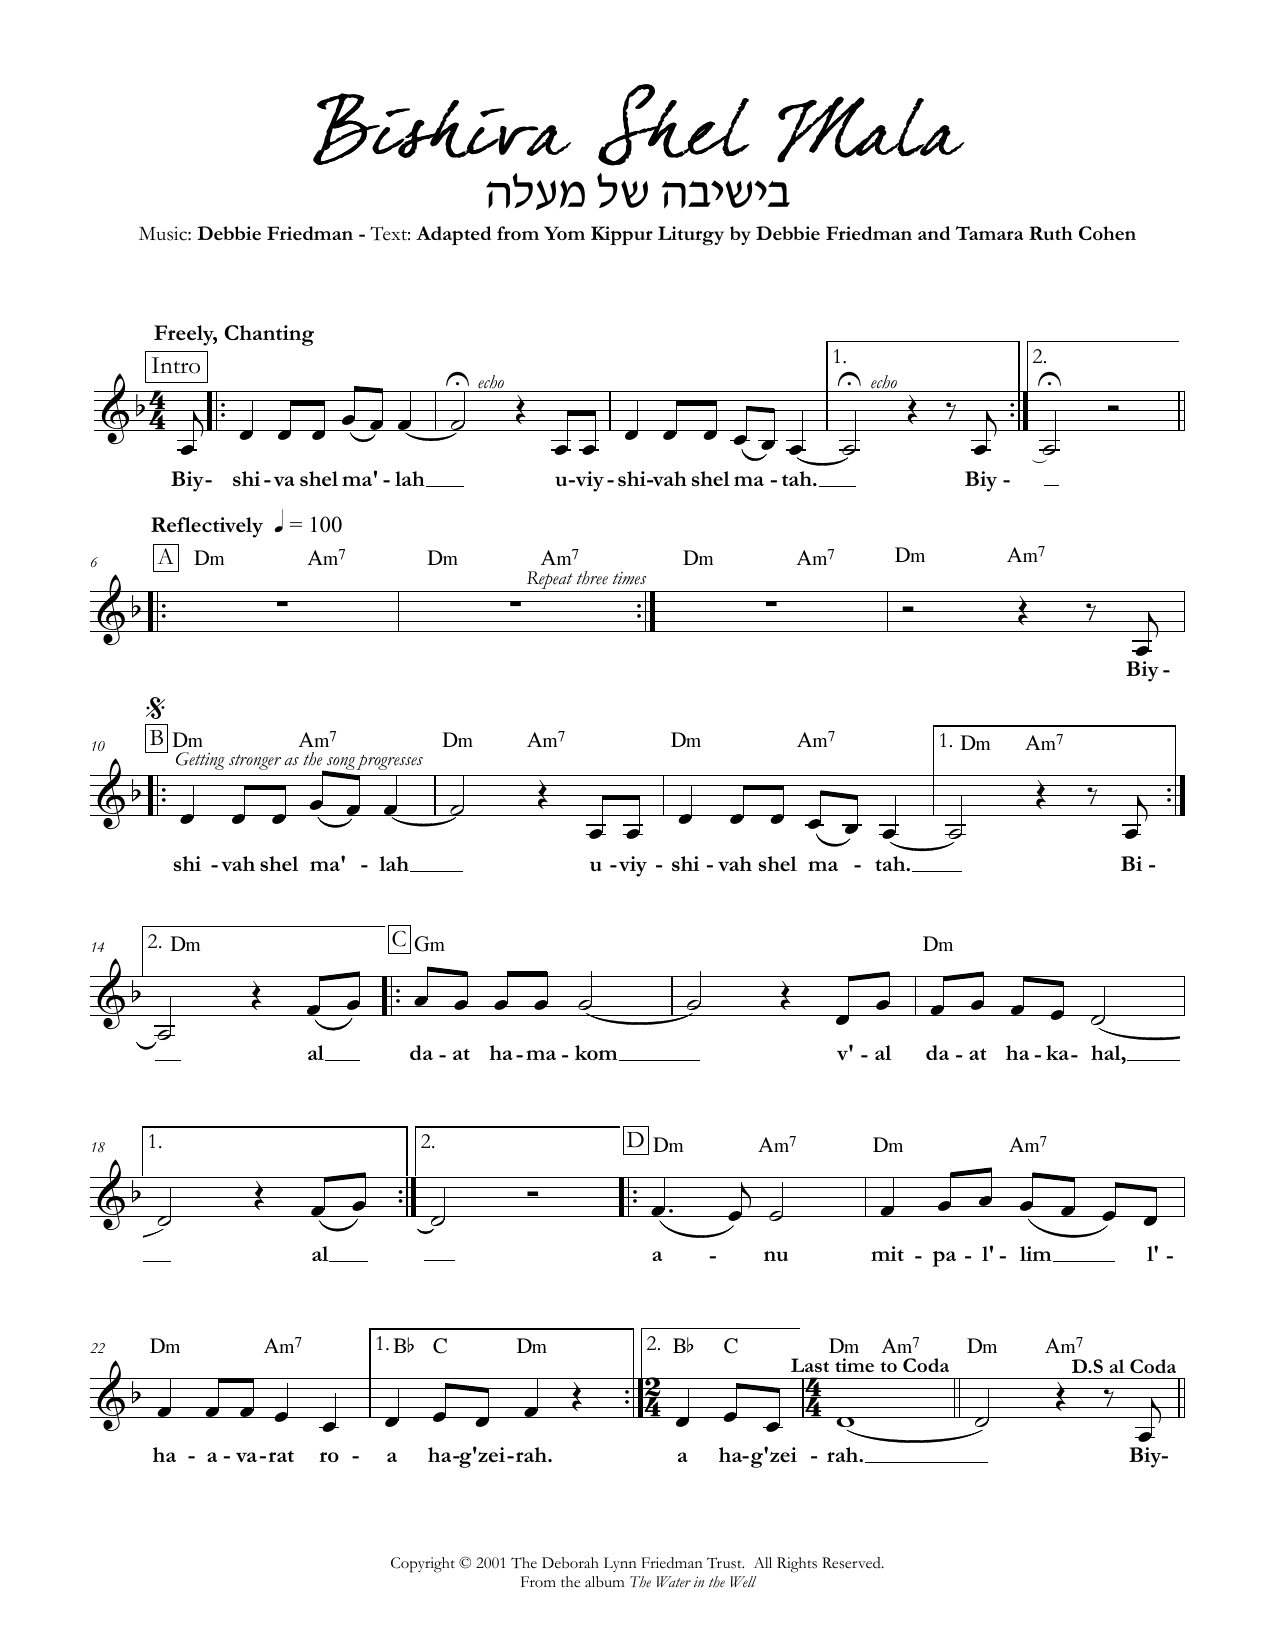 Download Debbie Friedman & Tamara Ruth Cohen Bishiva Shel Mala Sheet Music and learn how to play Lead Sheet / Fake Book PDF digital score in minutes